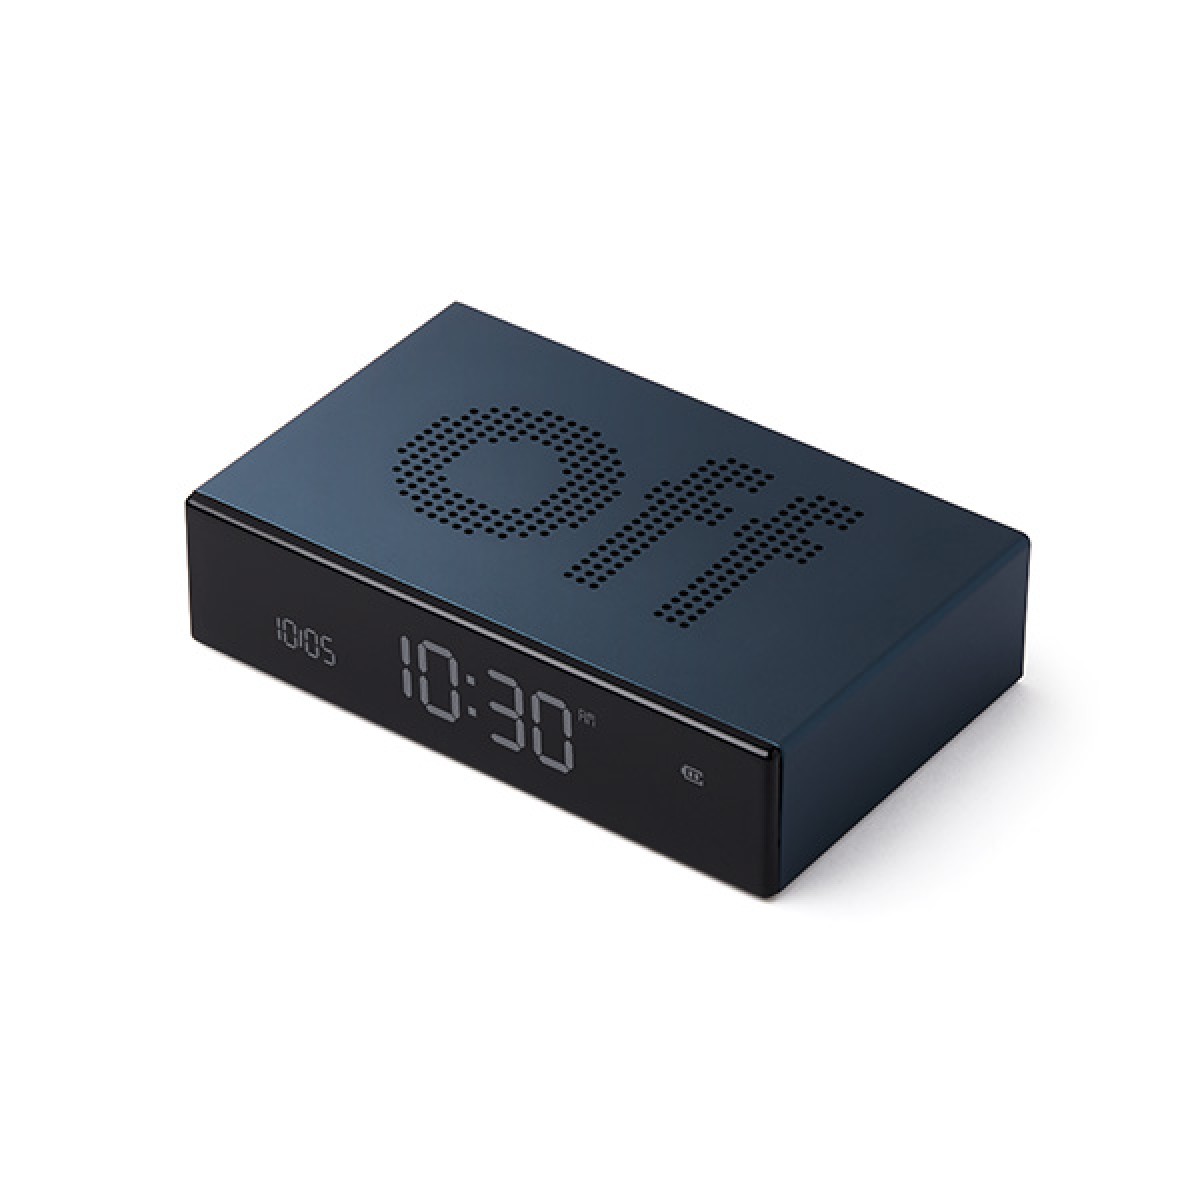 Lexon - Flip Premium - Reversible LCD alarm clock - Blue